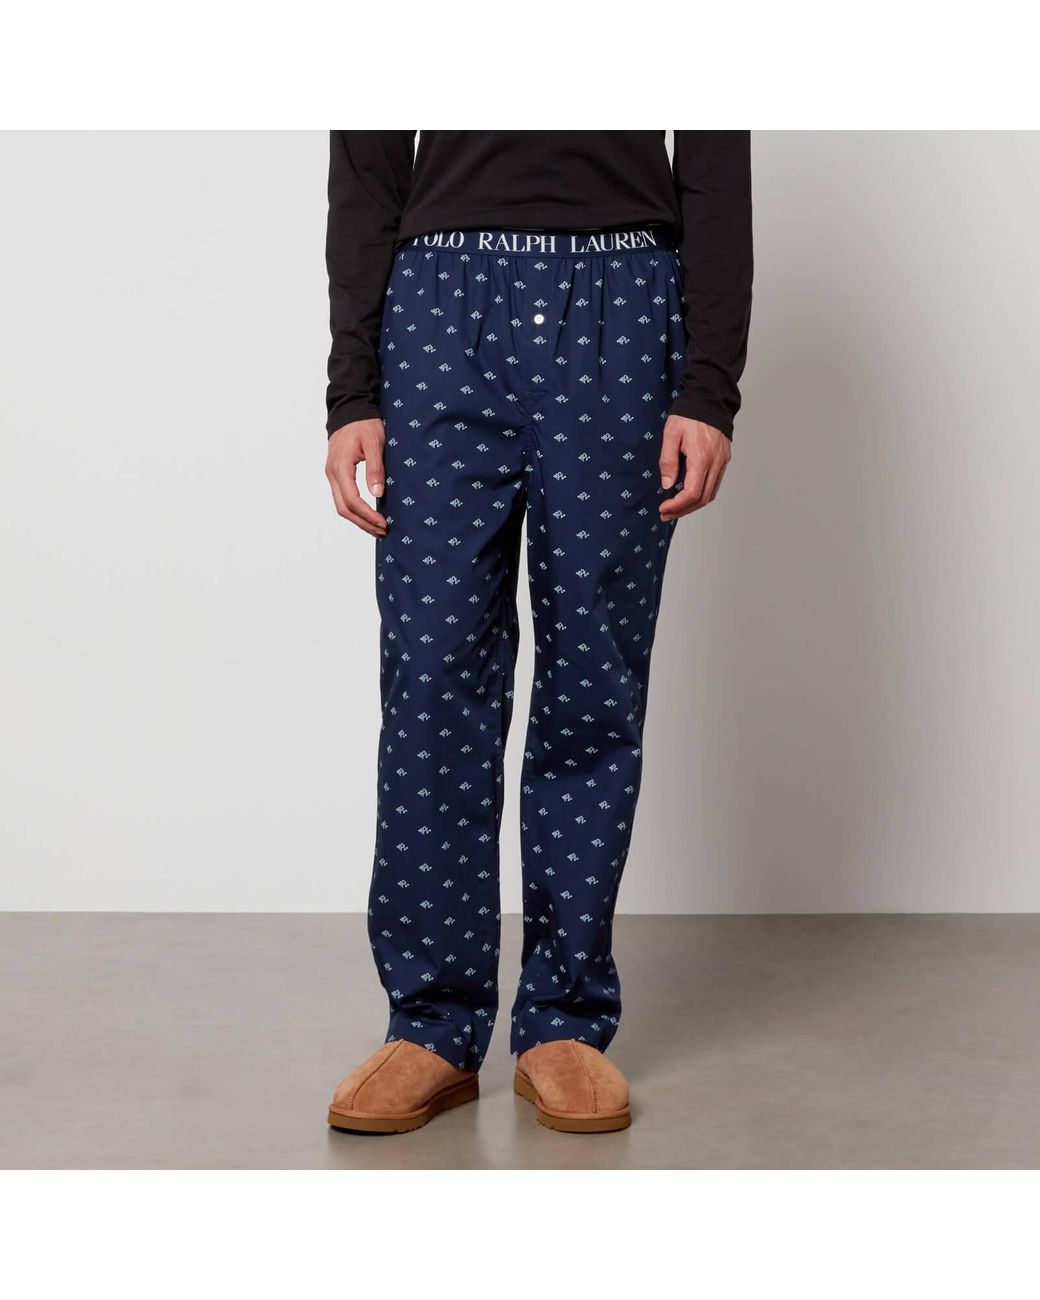 Cotton Pyjama Pants